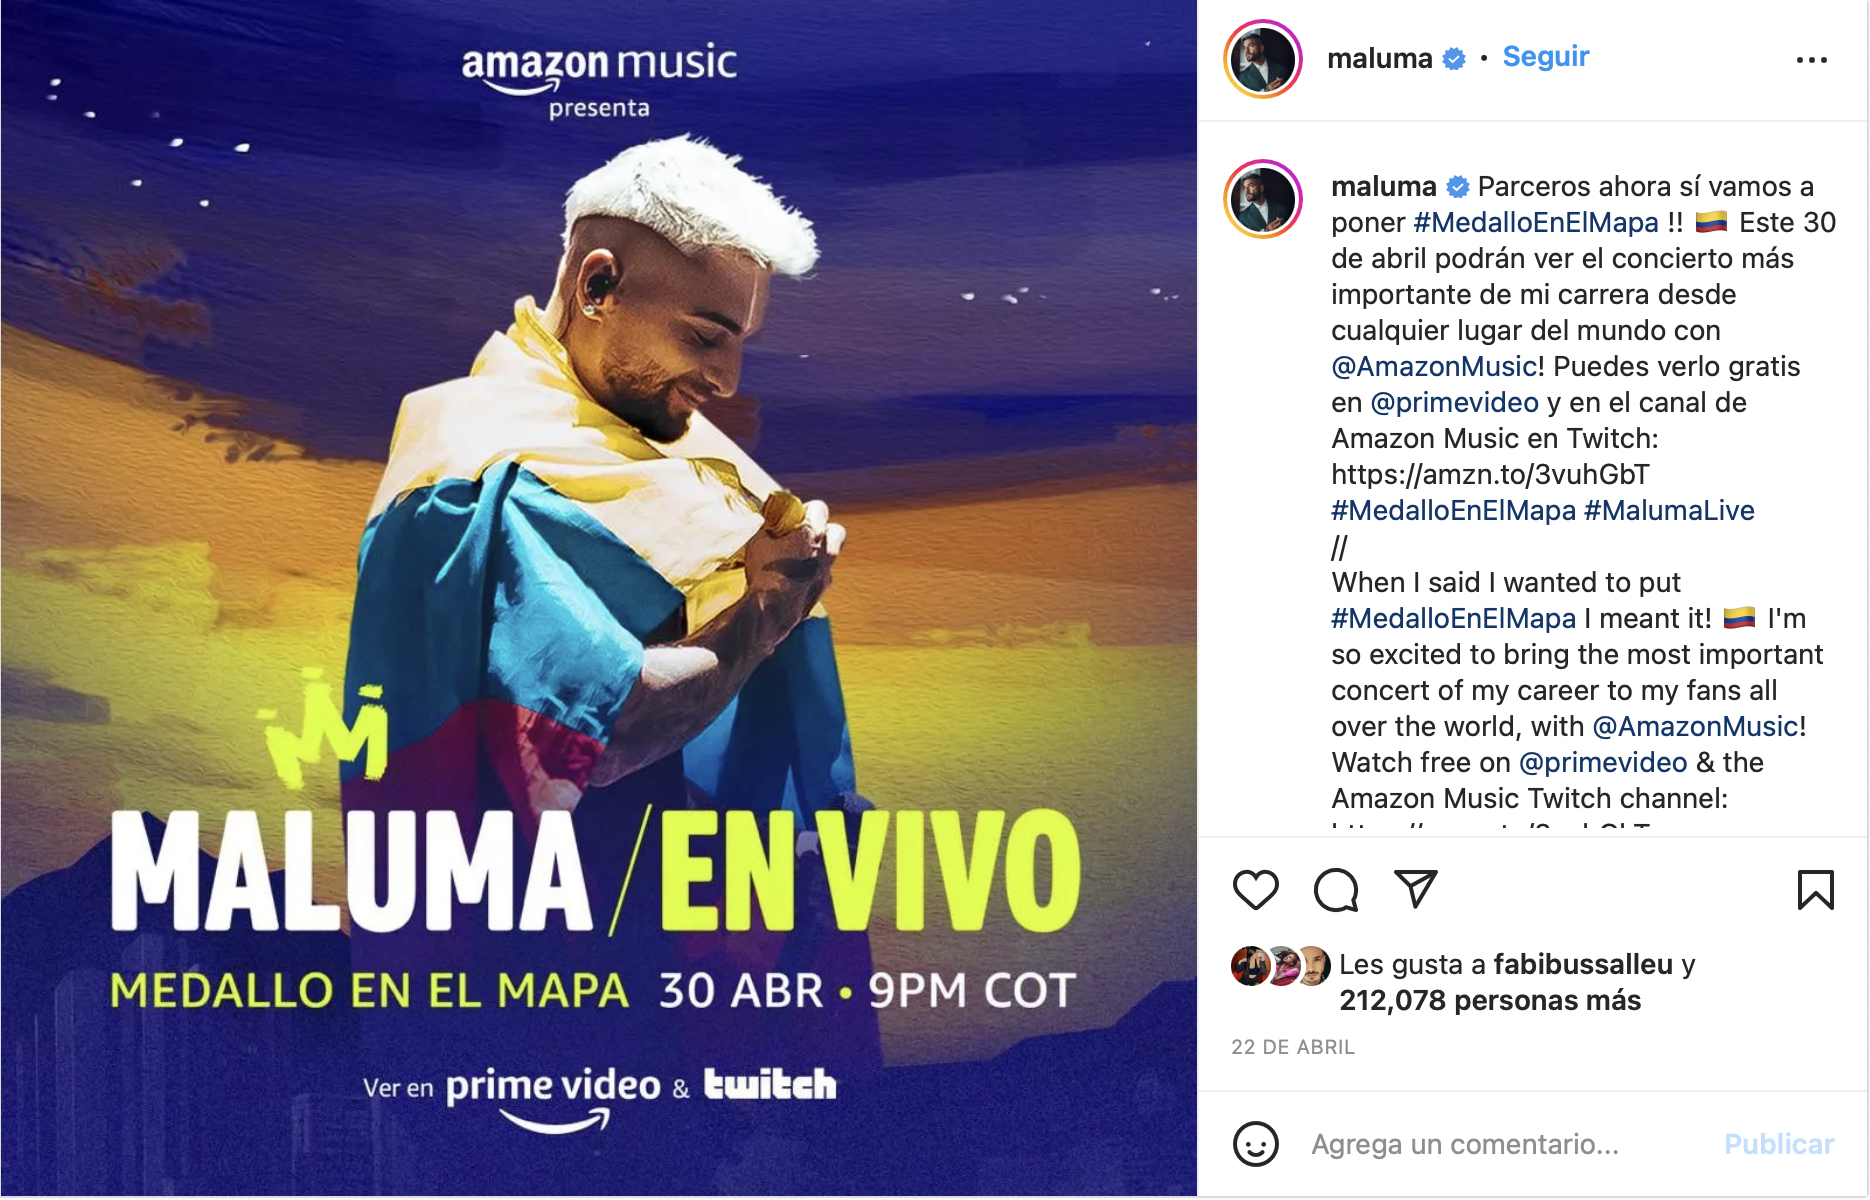 Florecer Mal sentar Amazon Music lanza Medallo en el Mapa y The Tour Diaries de Maluma - Infobae